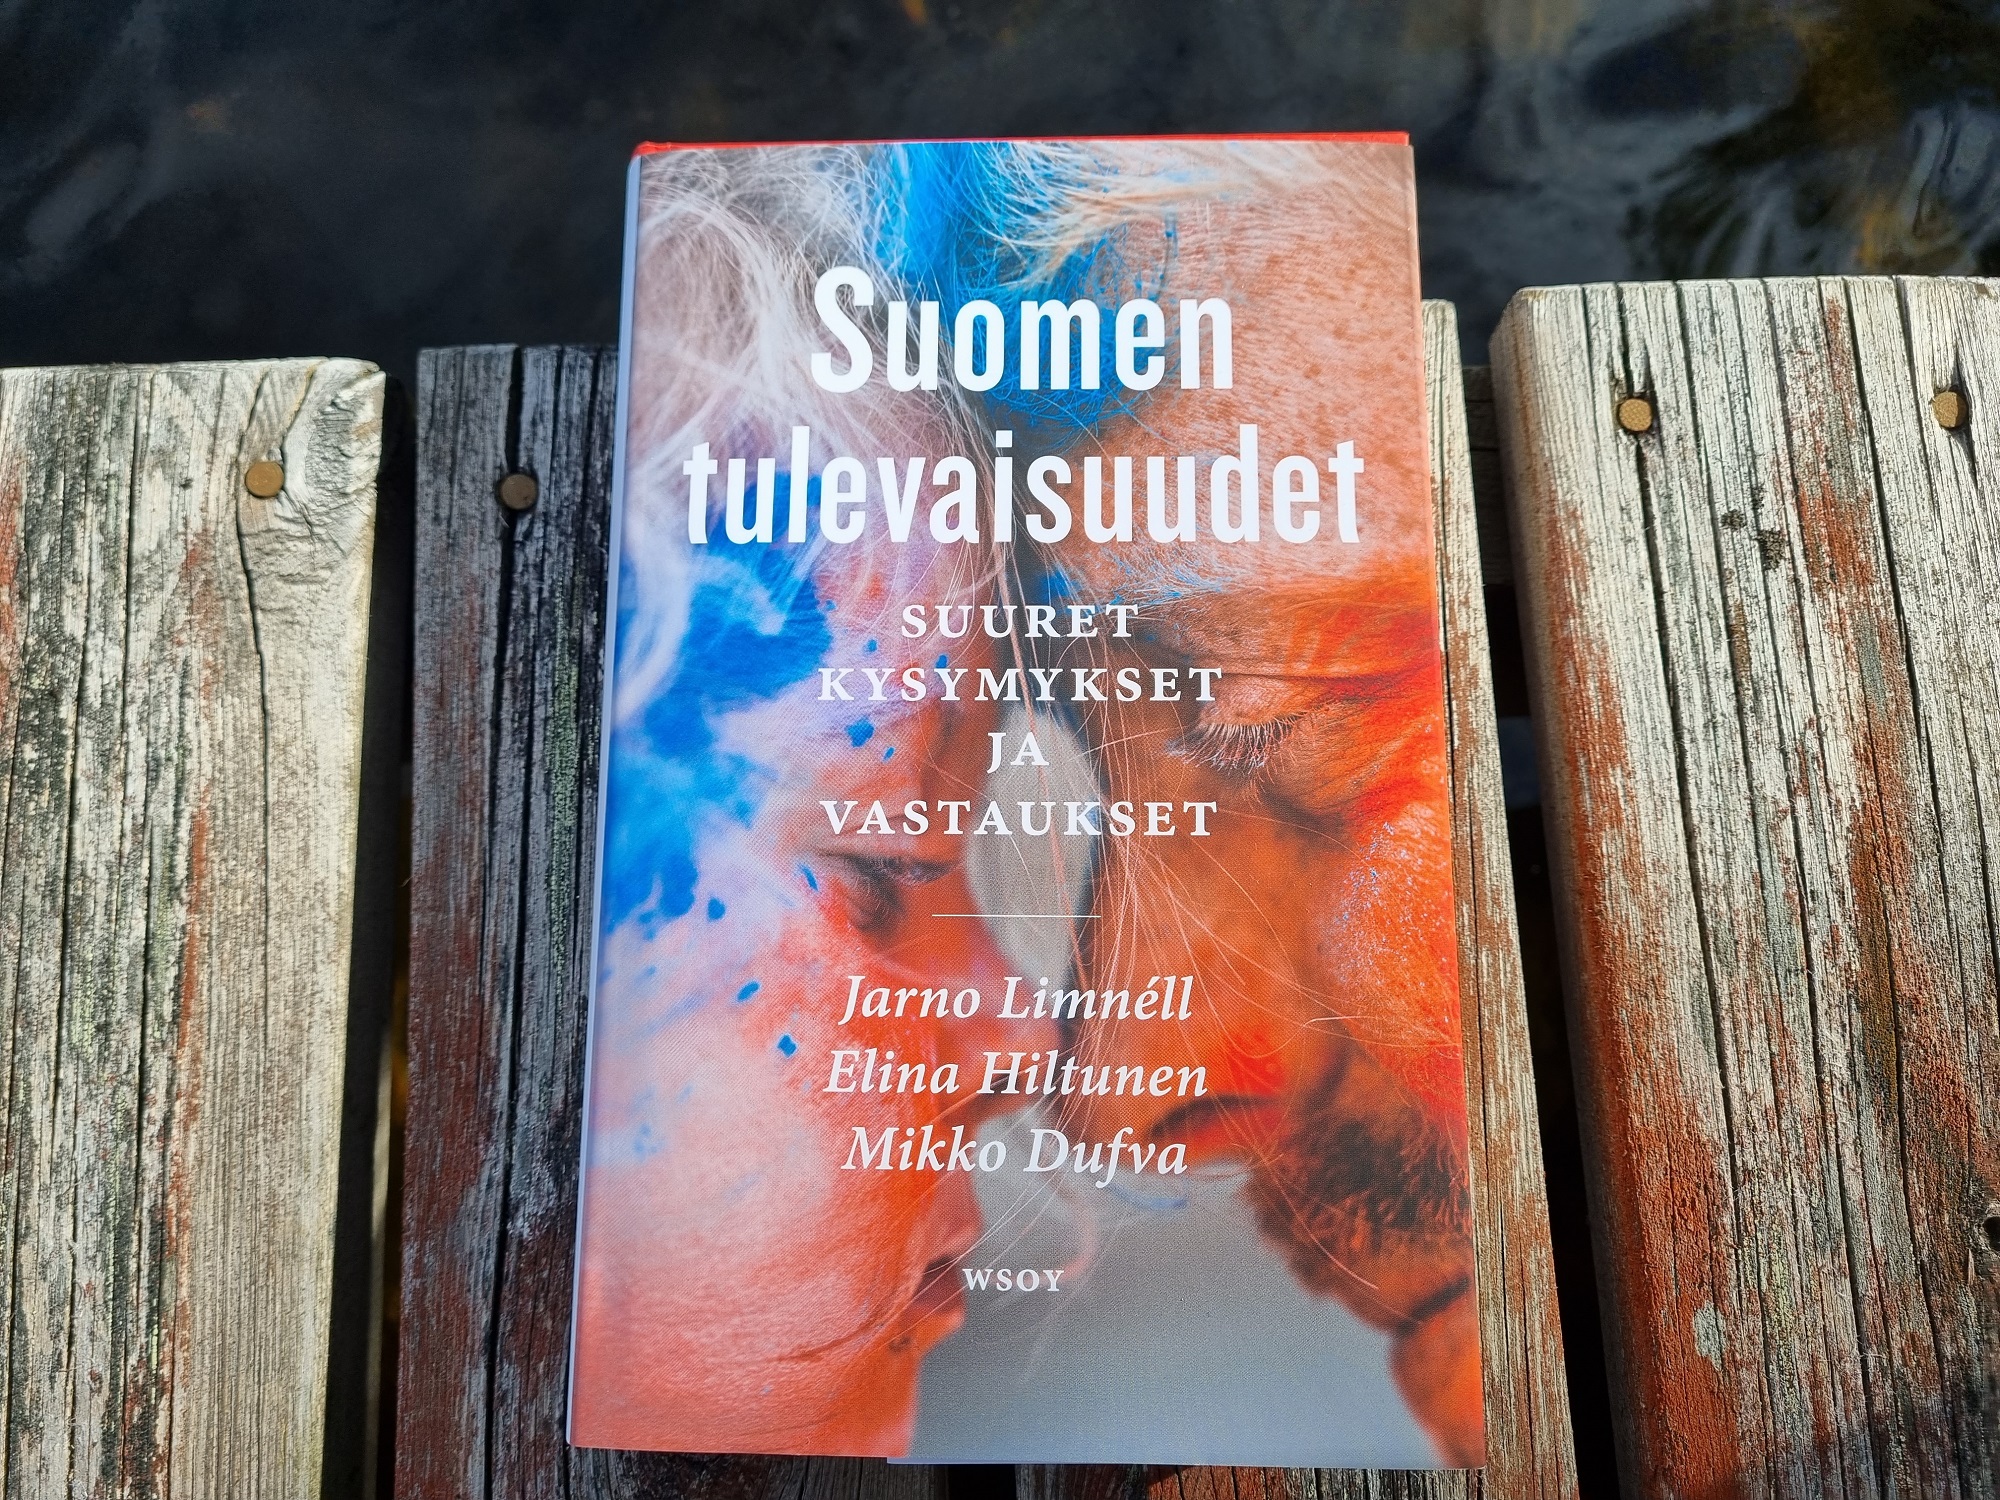 Limnéll, Hiltunen & Dufva: Suomen tulevaisuudet